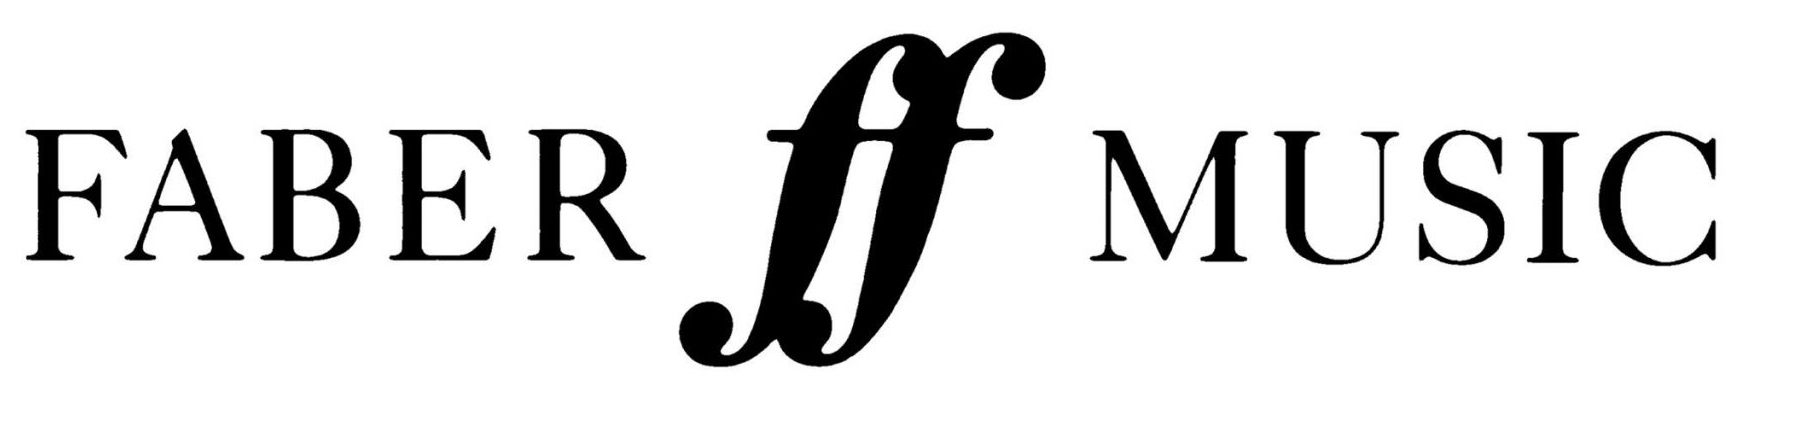 Faber Music logo